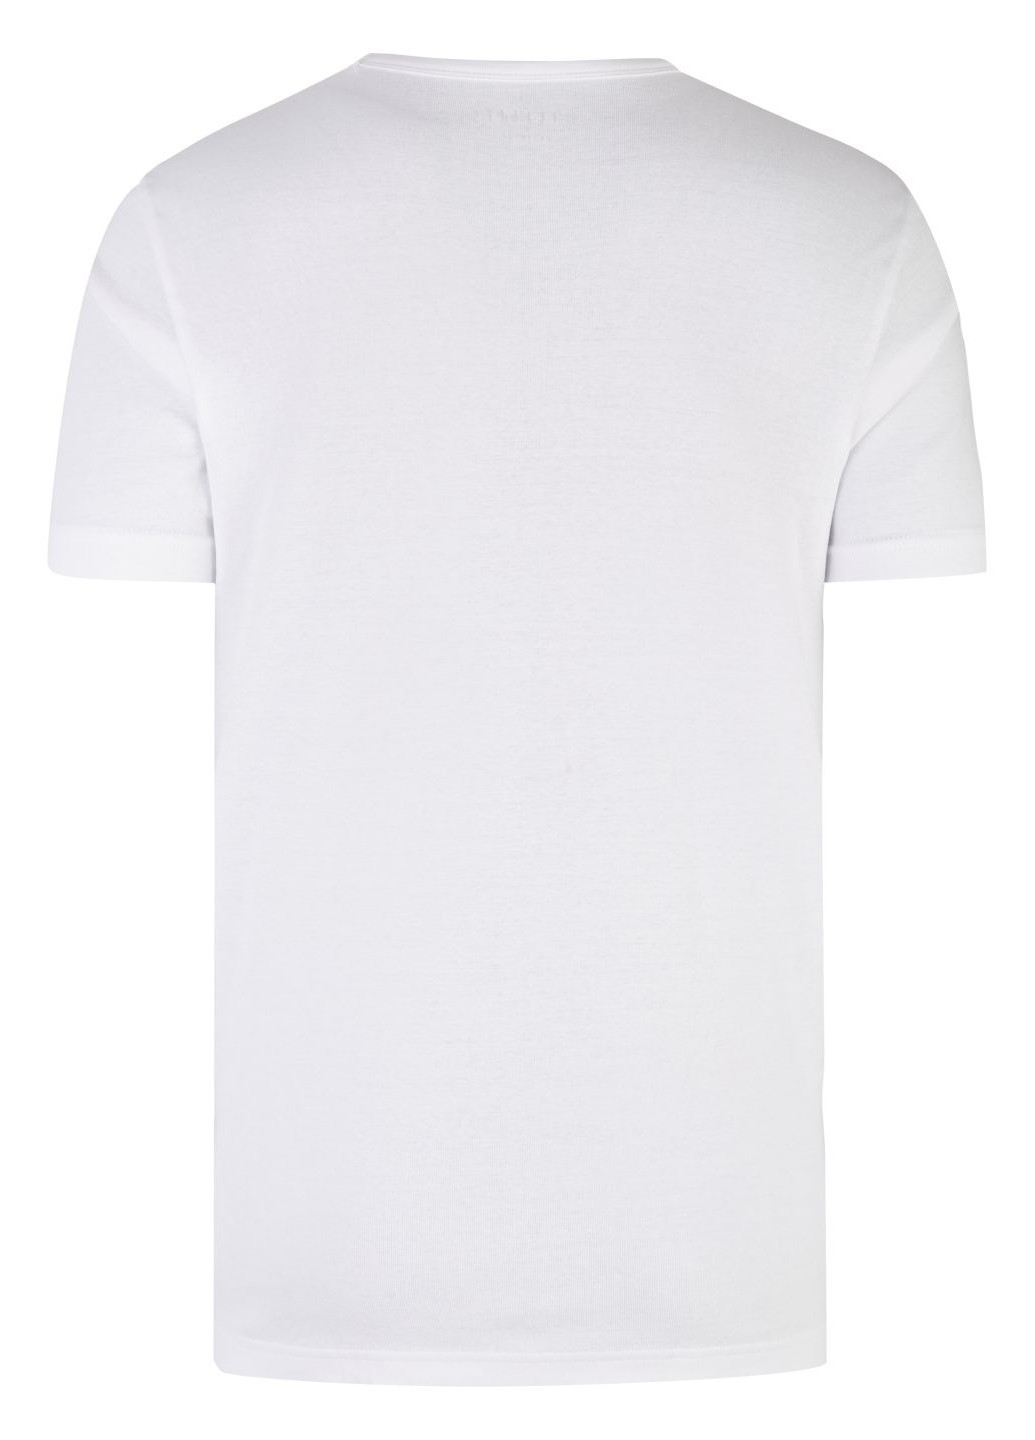 Белая мужская нательная футболка набор из 2 шт. белый Hechter